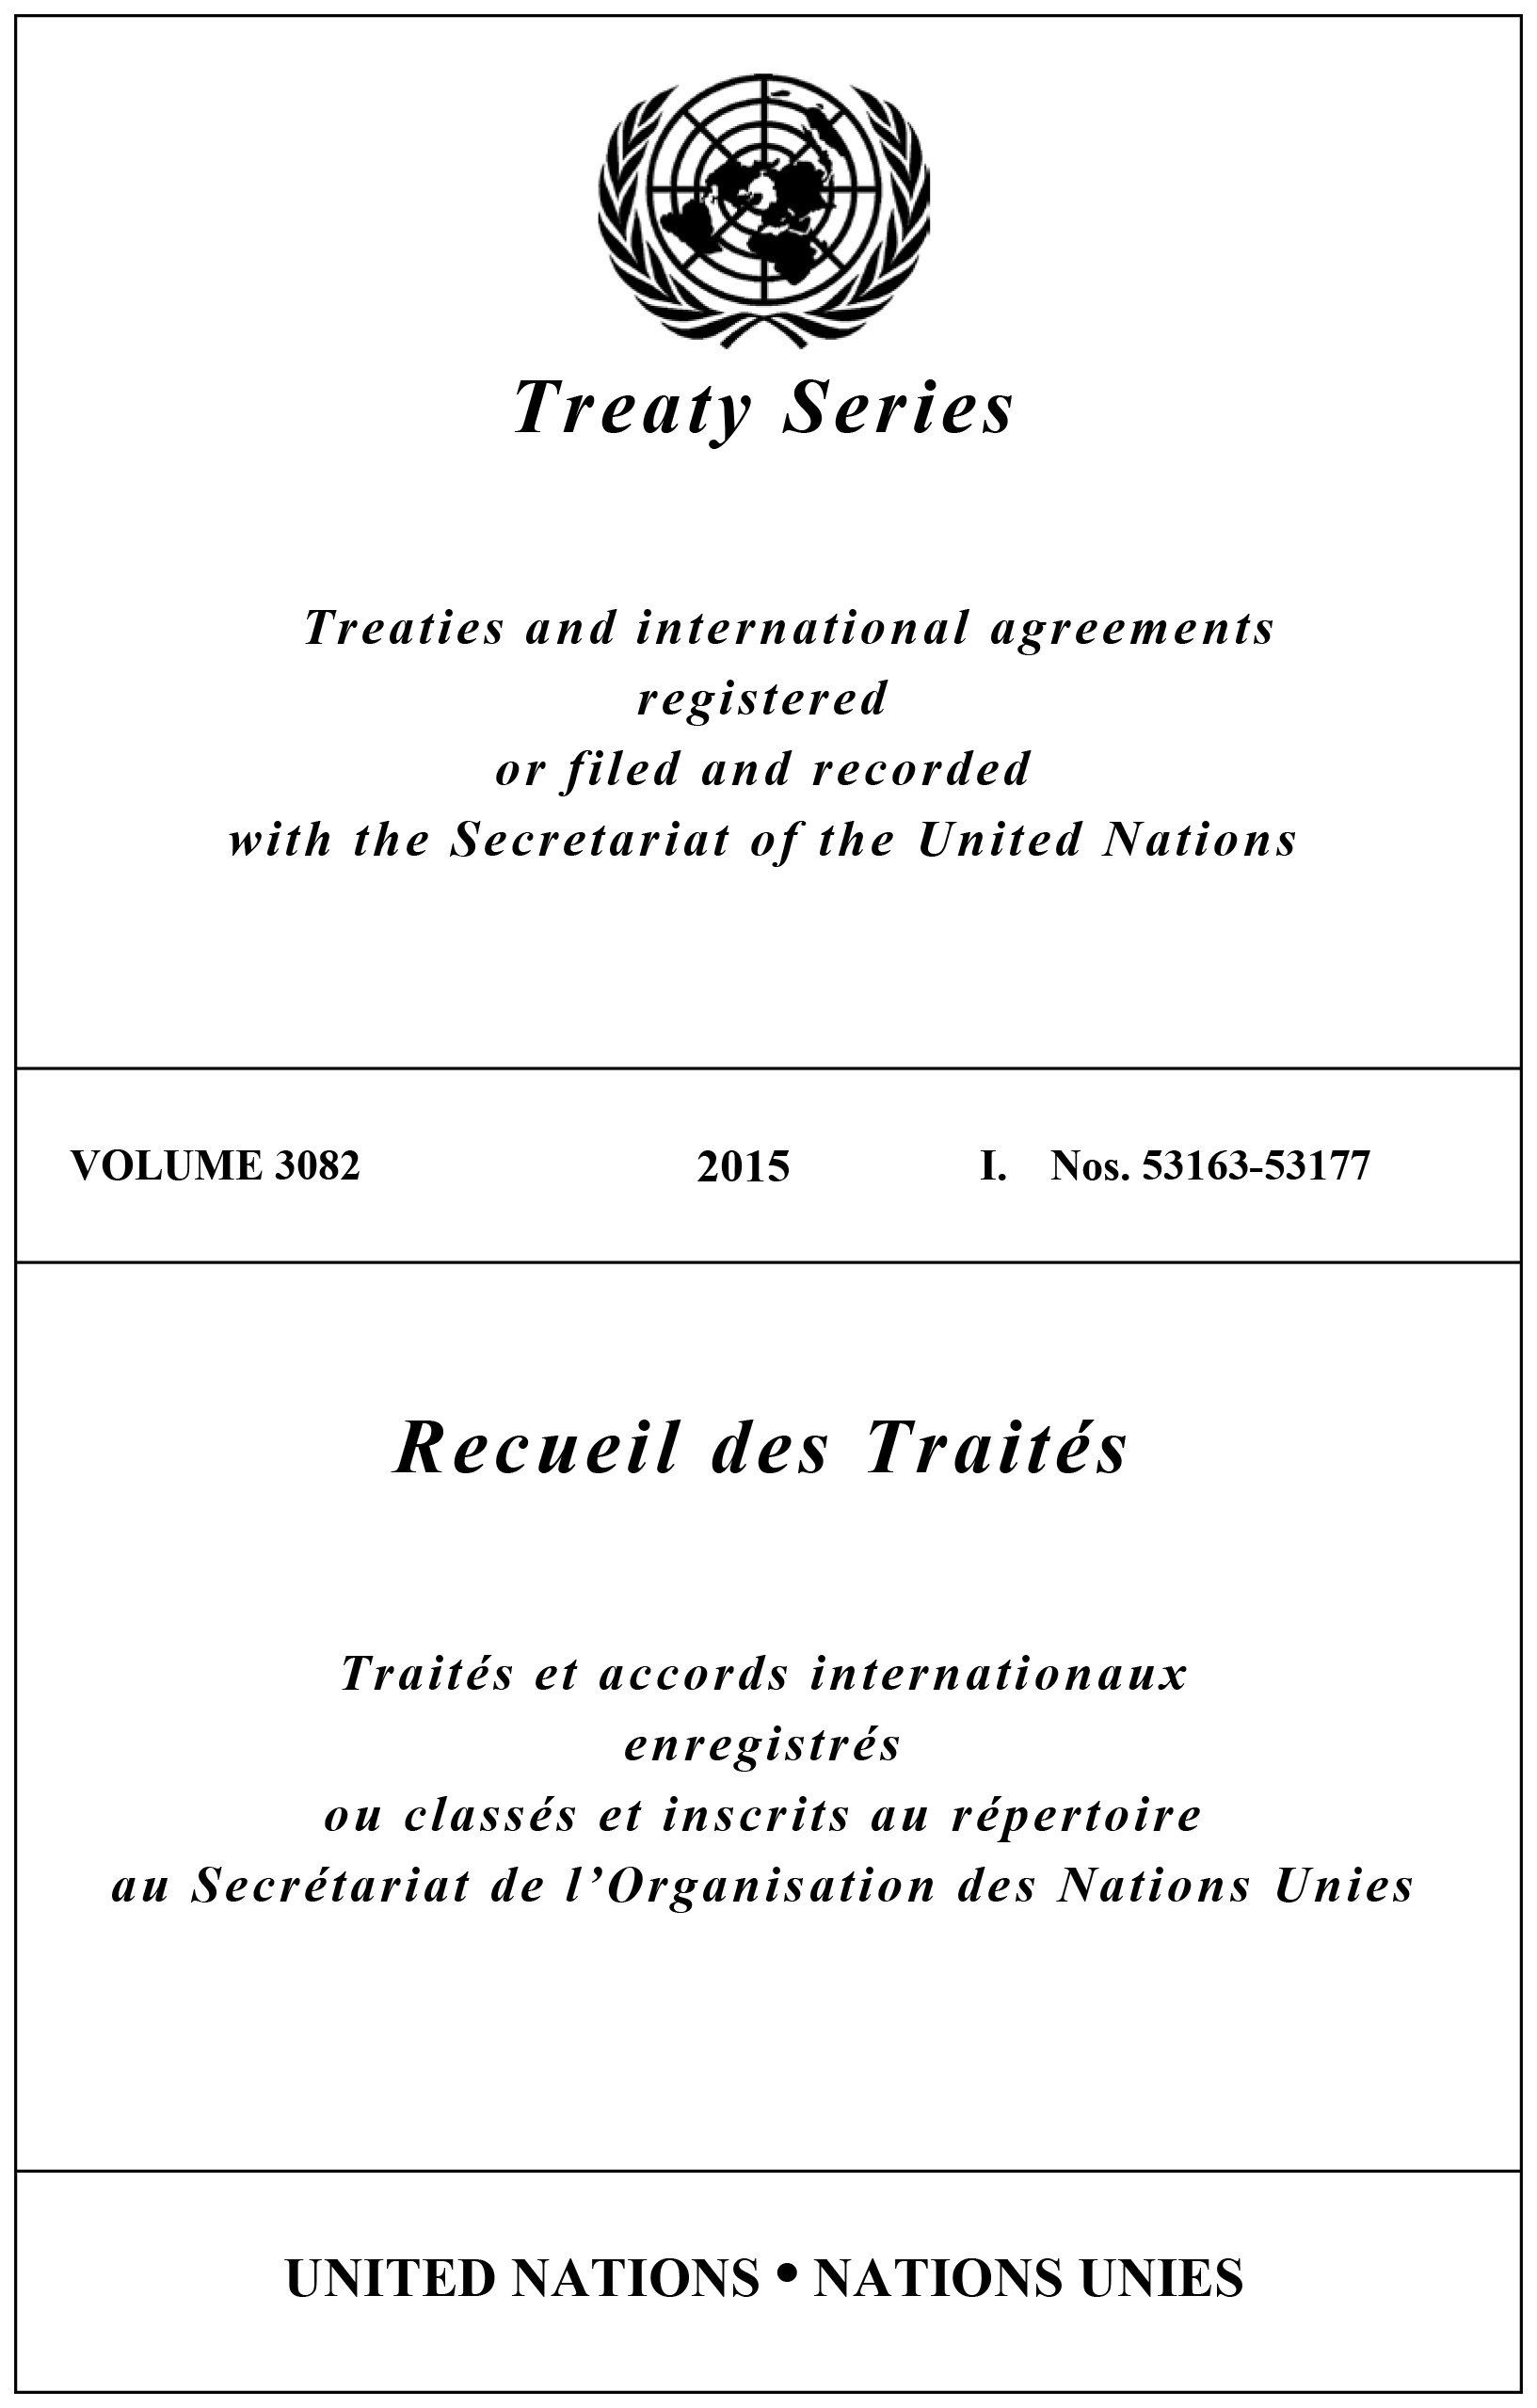 image of Treaty Series 3082